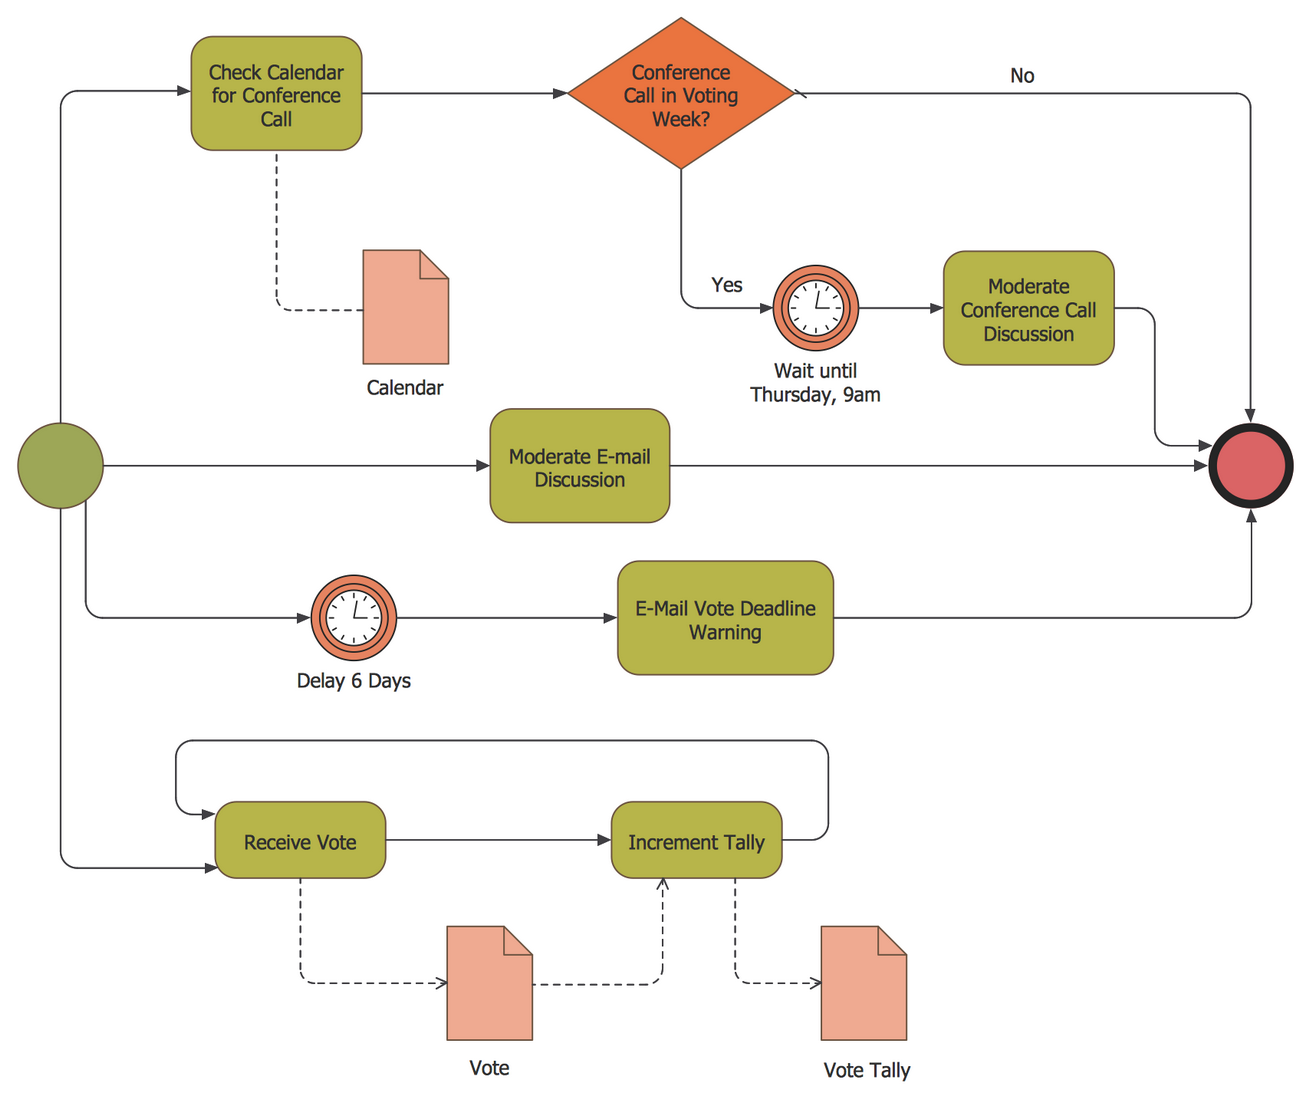 [DIAGRAM] Sap Business Process Diagrams - MYDIAGRAM.ONLINE